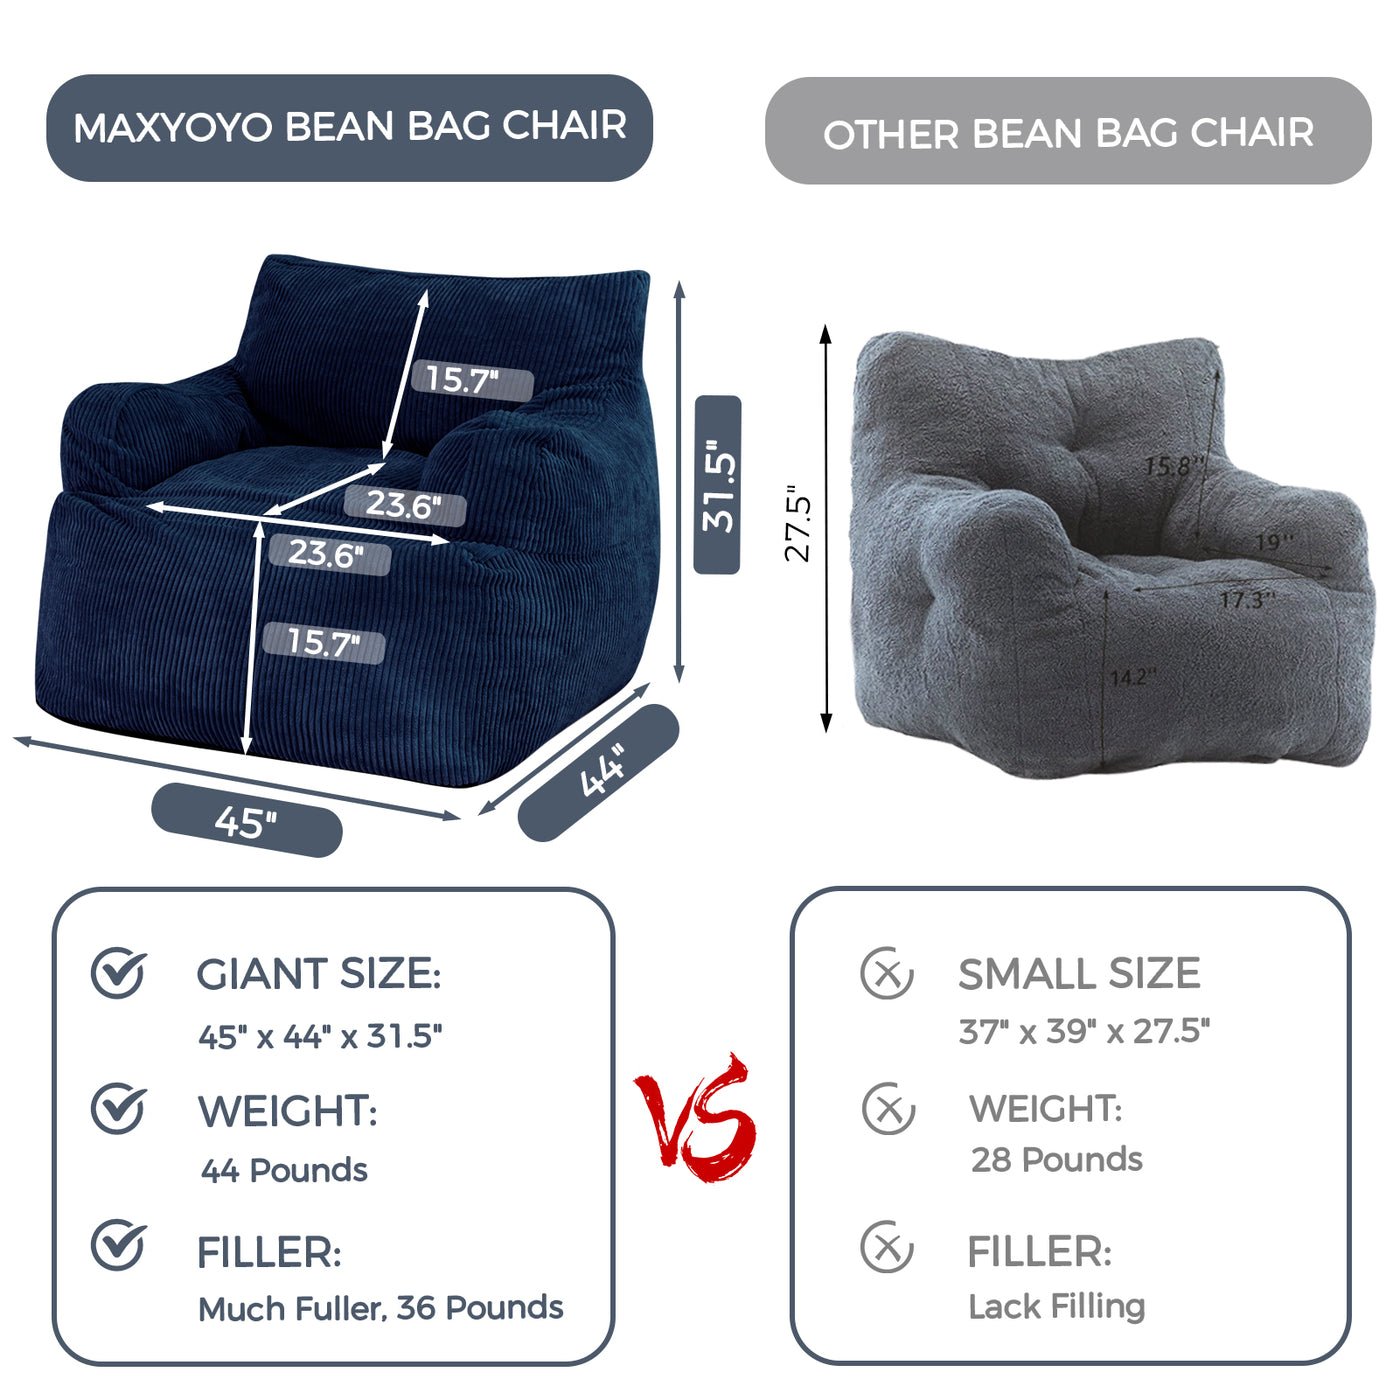 MAXYOYO Giant Bean Bag Chair, Stuffed Bean Bag Couch for Living Room, Navy